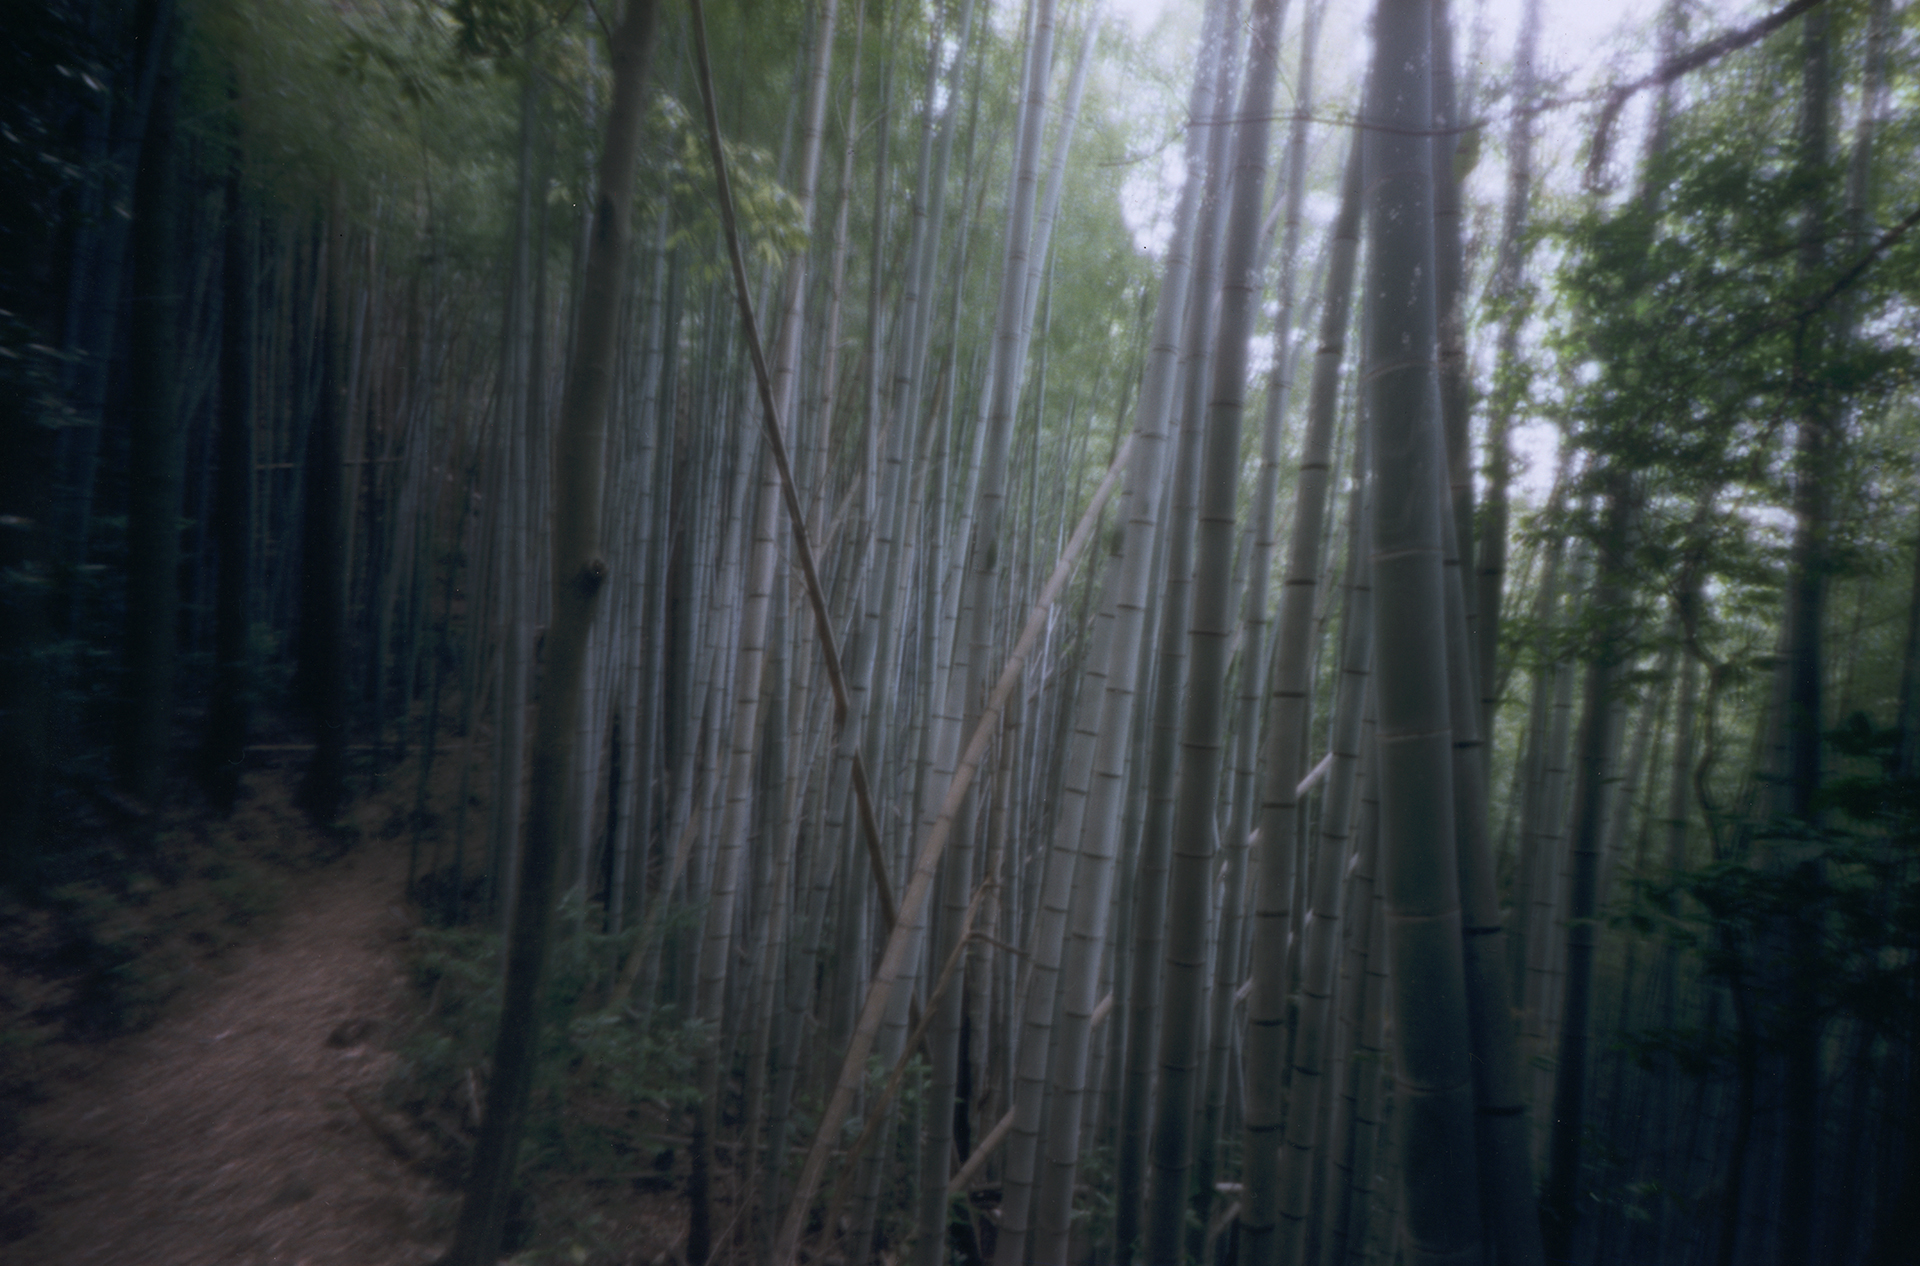 Blue forest. Shikoku, Japan, 2013